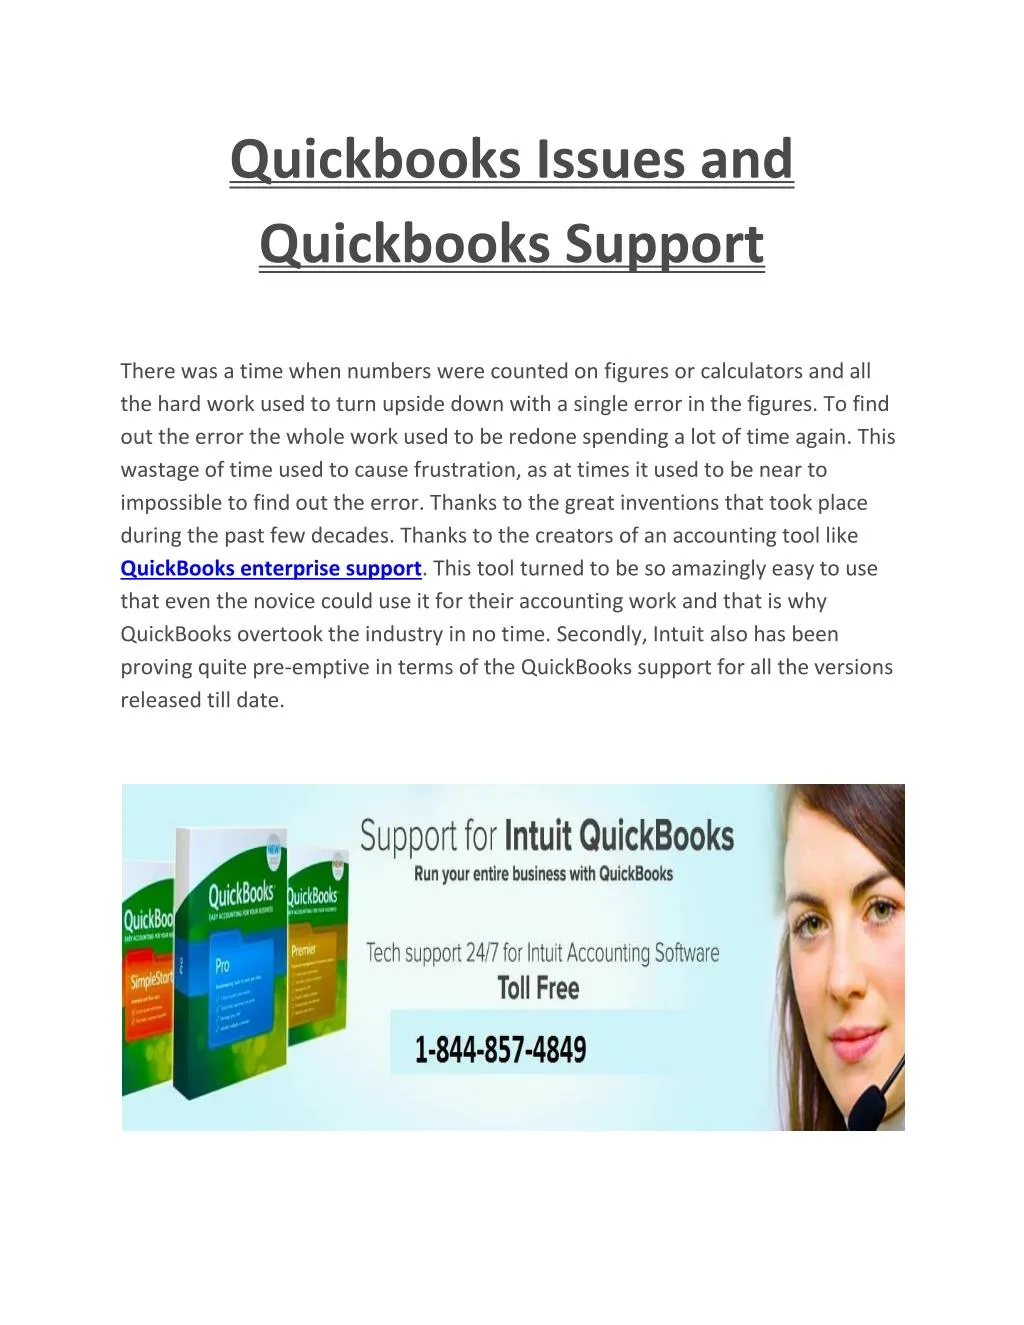 quickbooks issues and quickbooks support